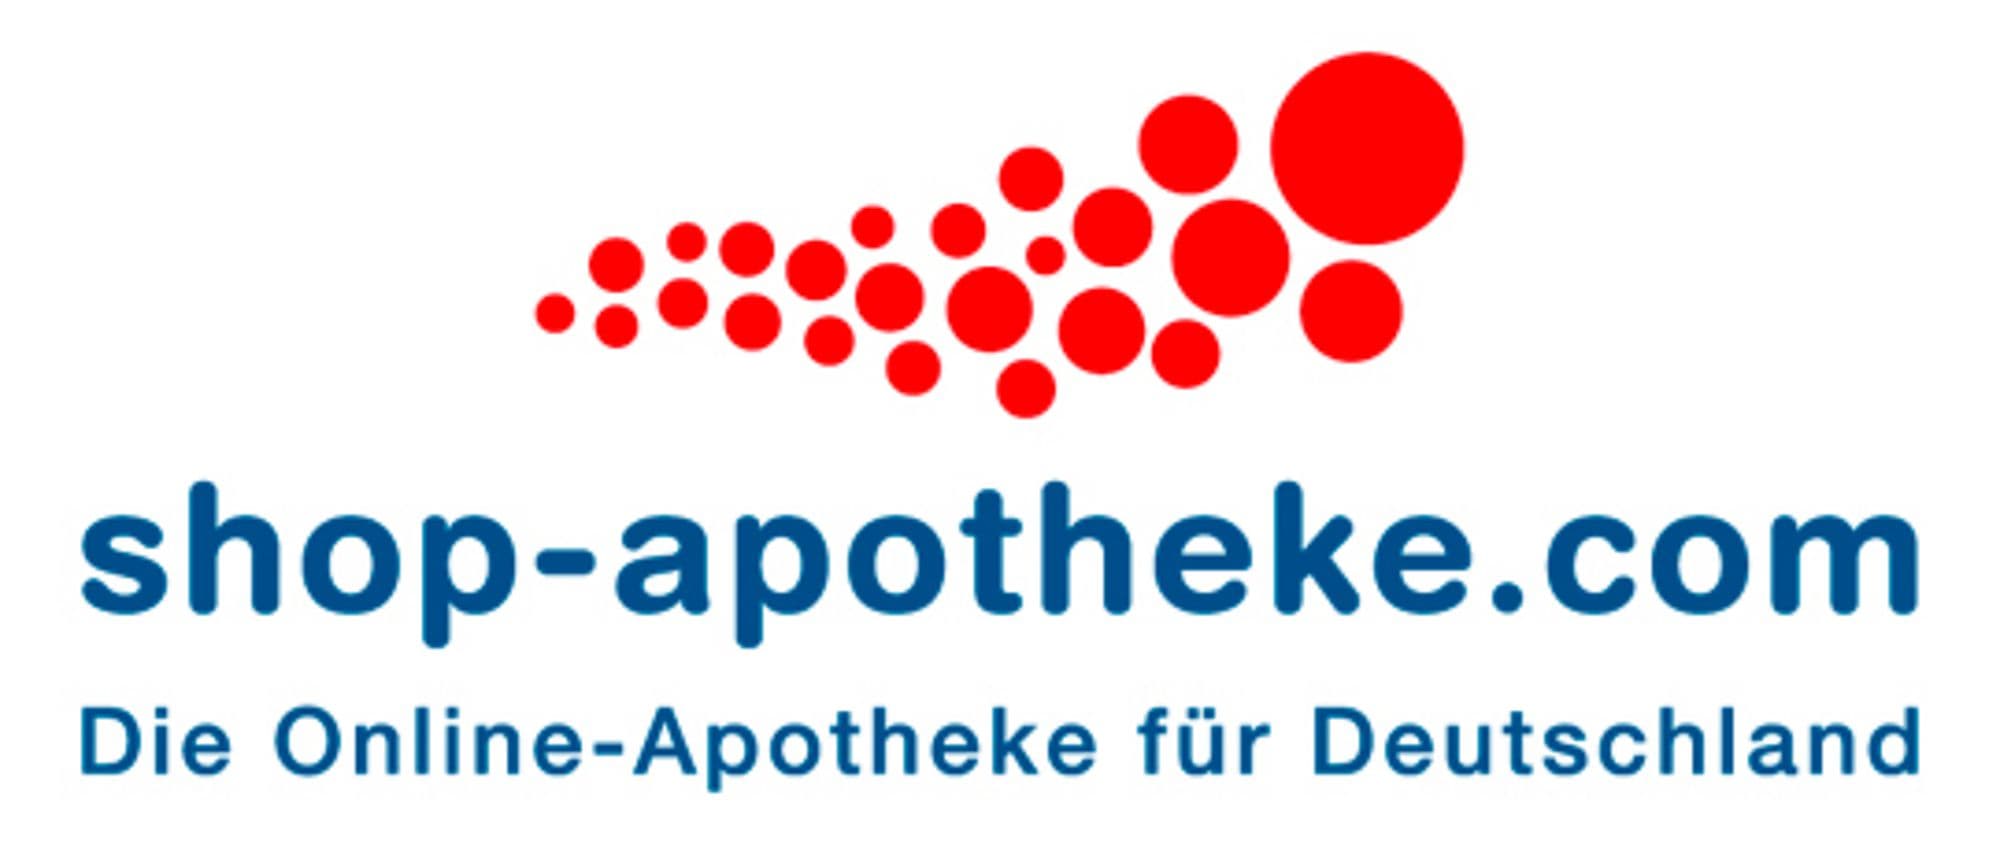 shop-apotheke.com